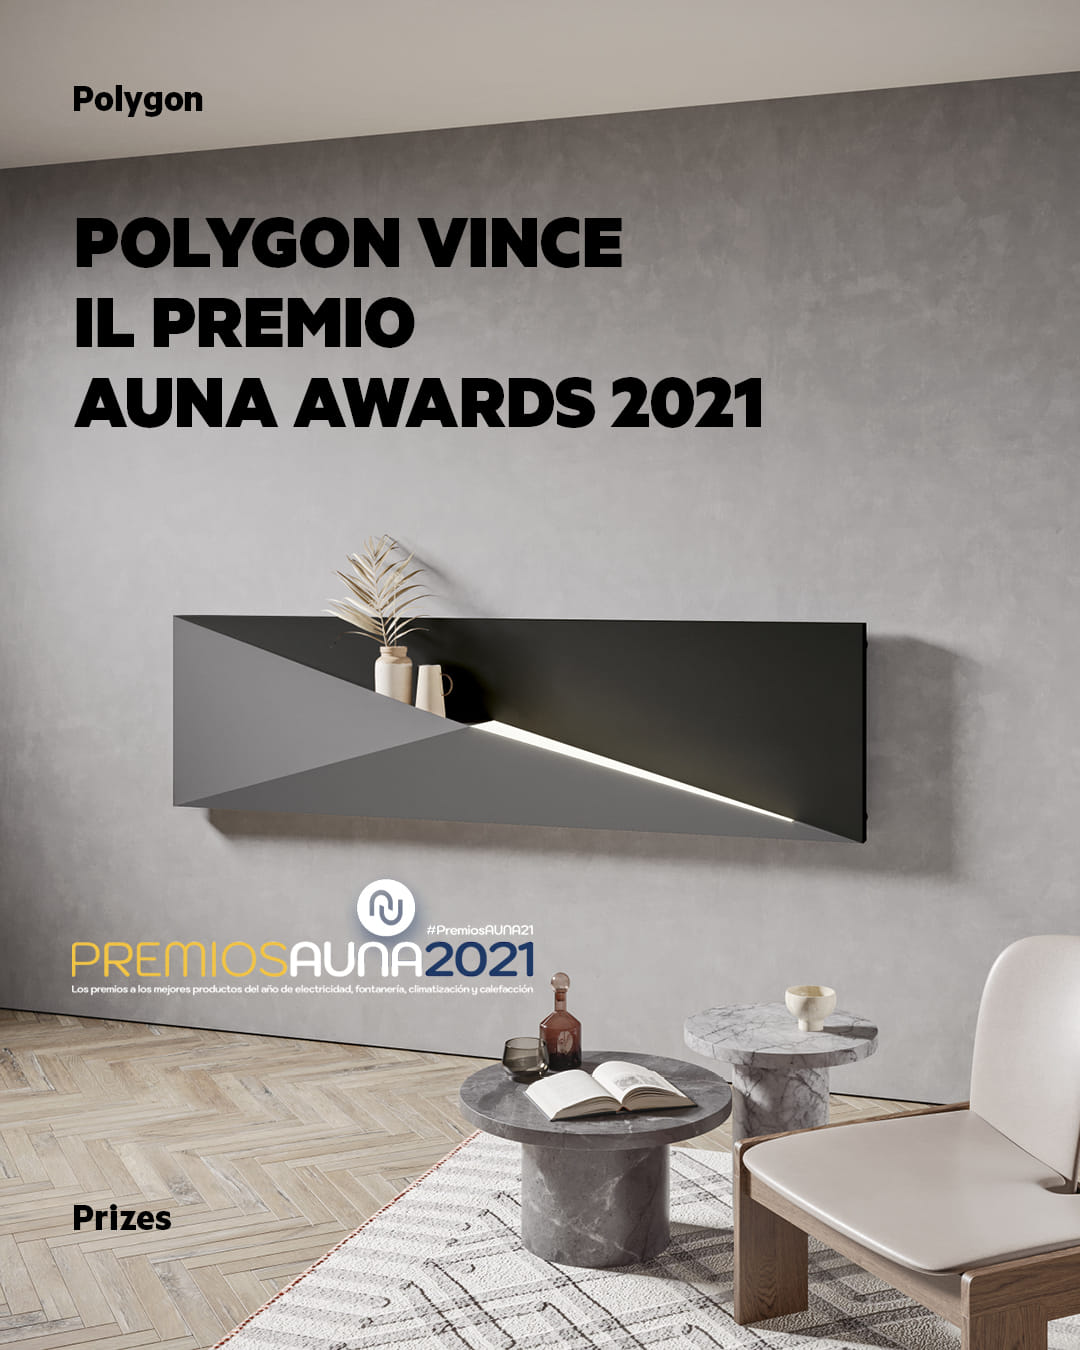 Polygon remporte l'AUNA Awards 2021